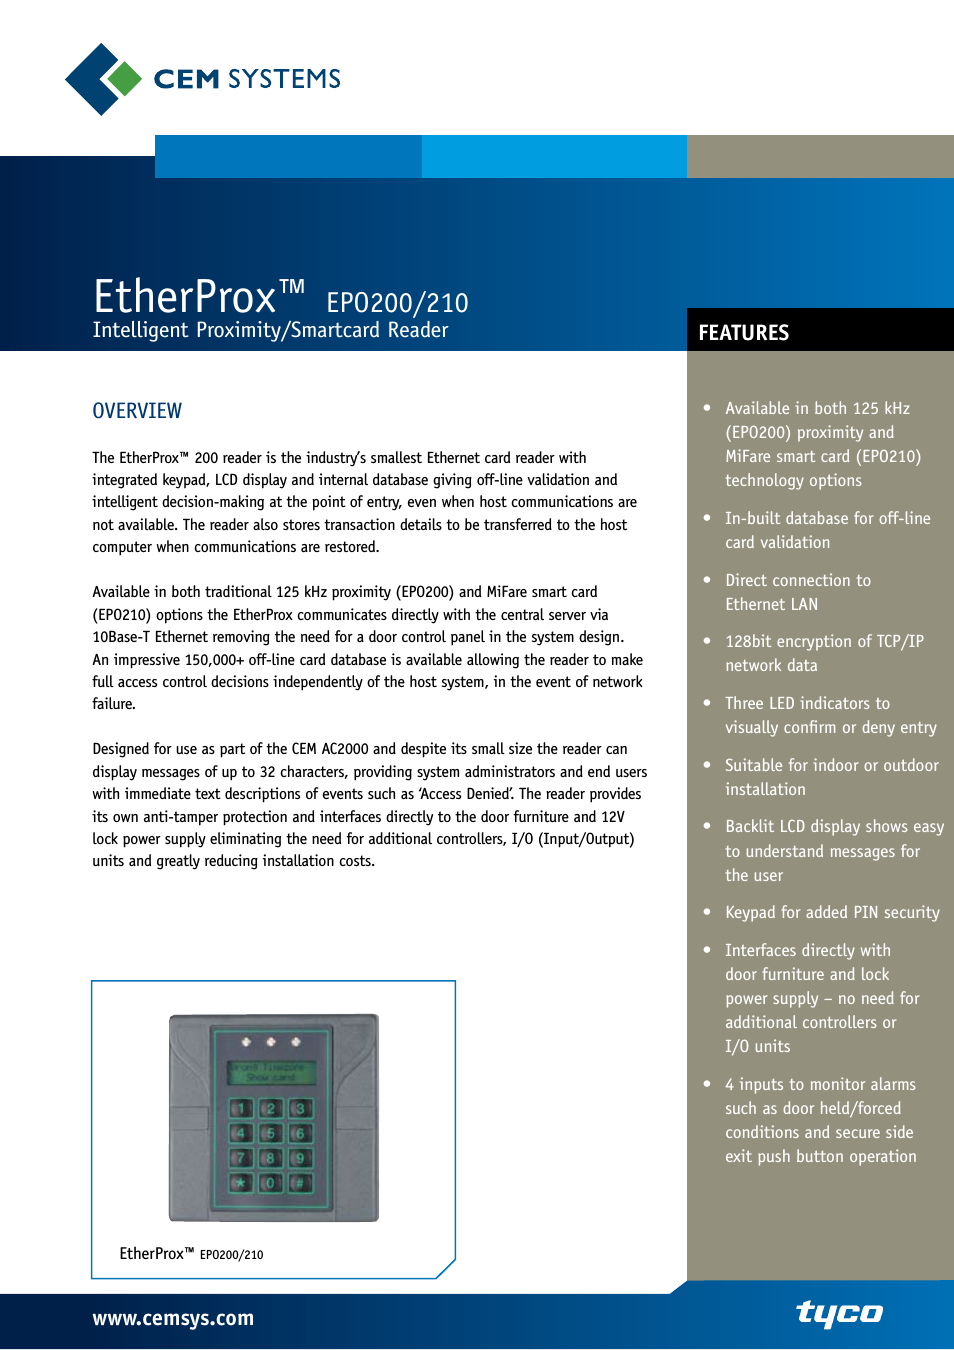 EtherProx EPO210